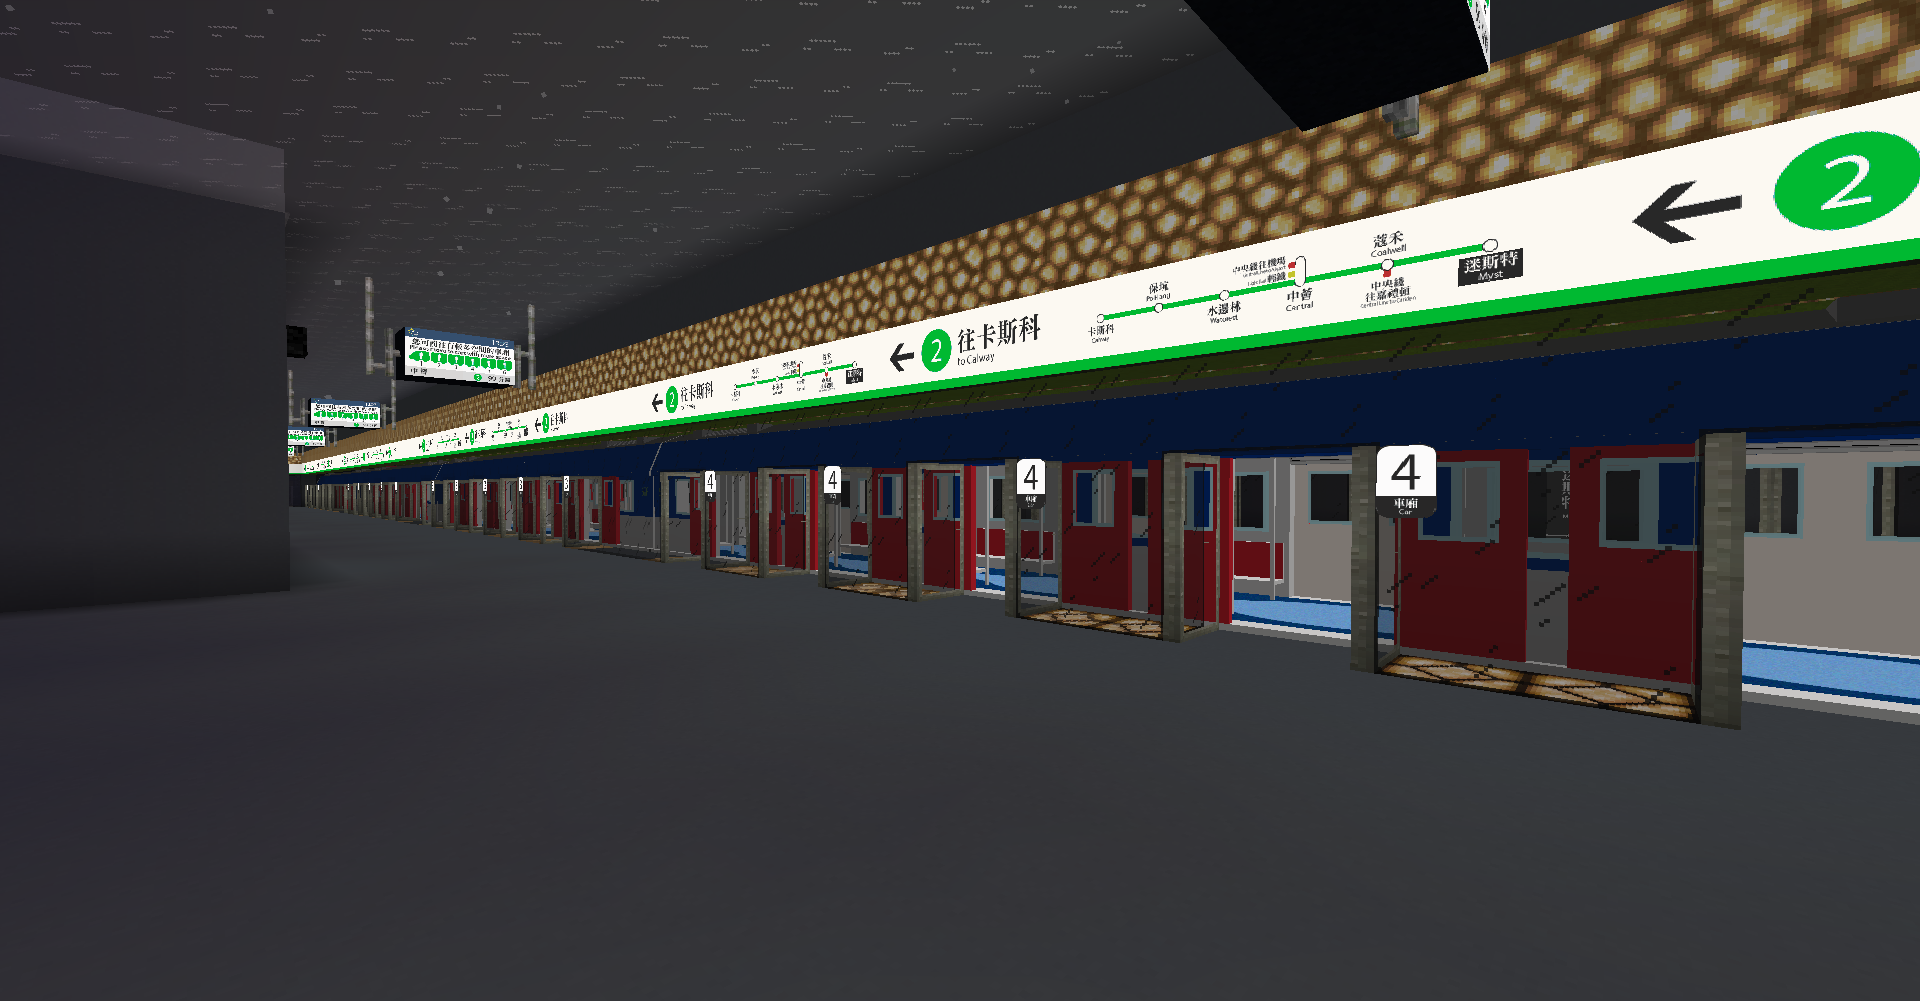 SCR Myst Station Platform 2